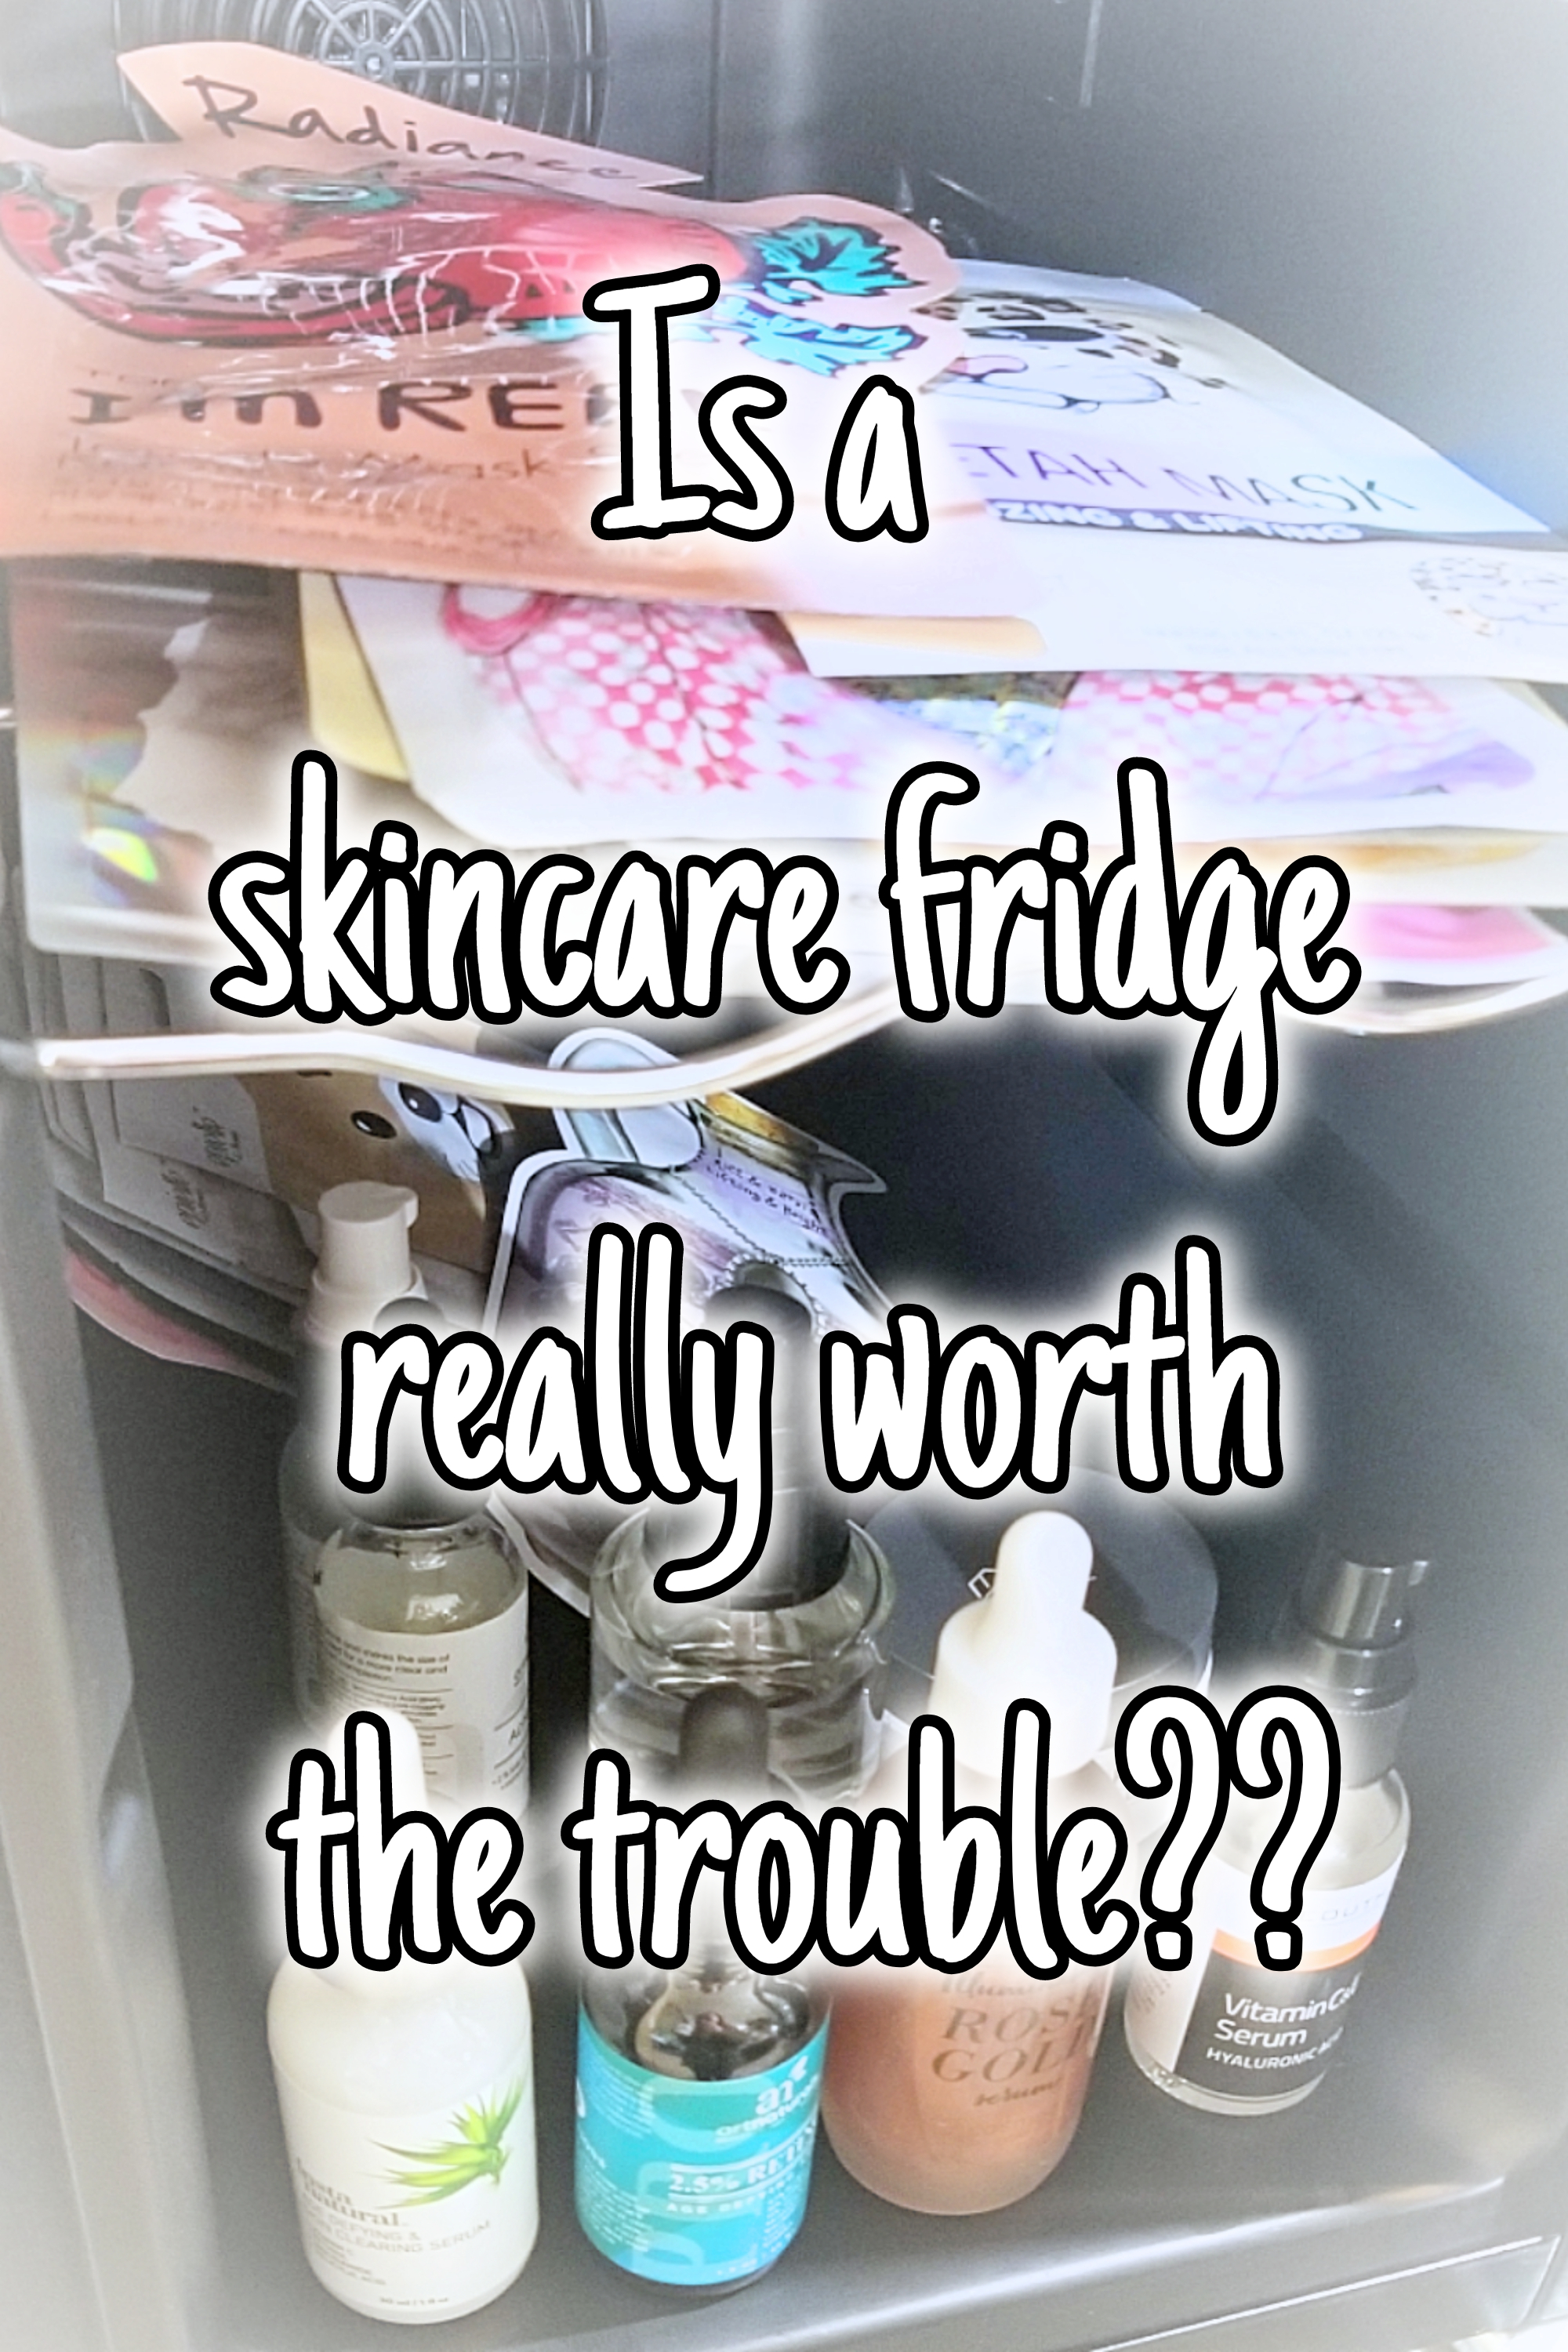 Is a skincare fridge worth it?